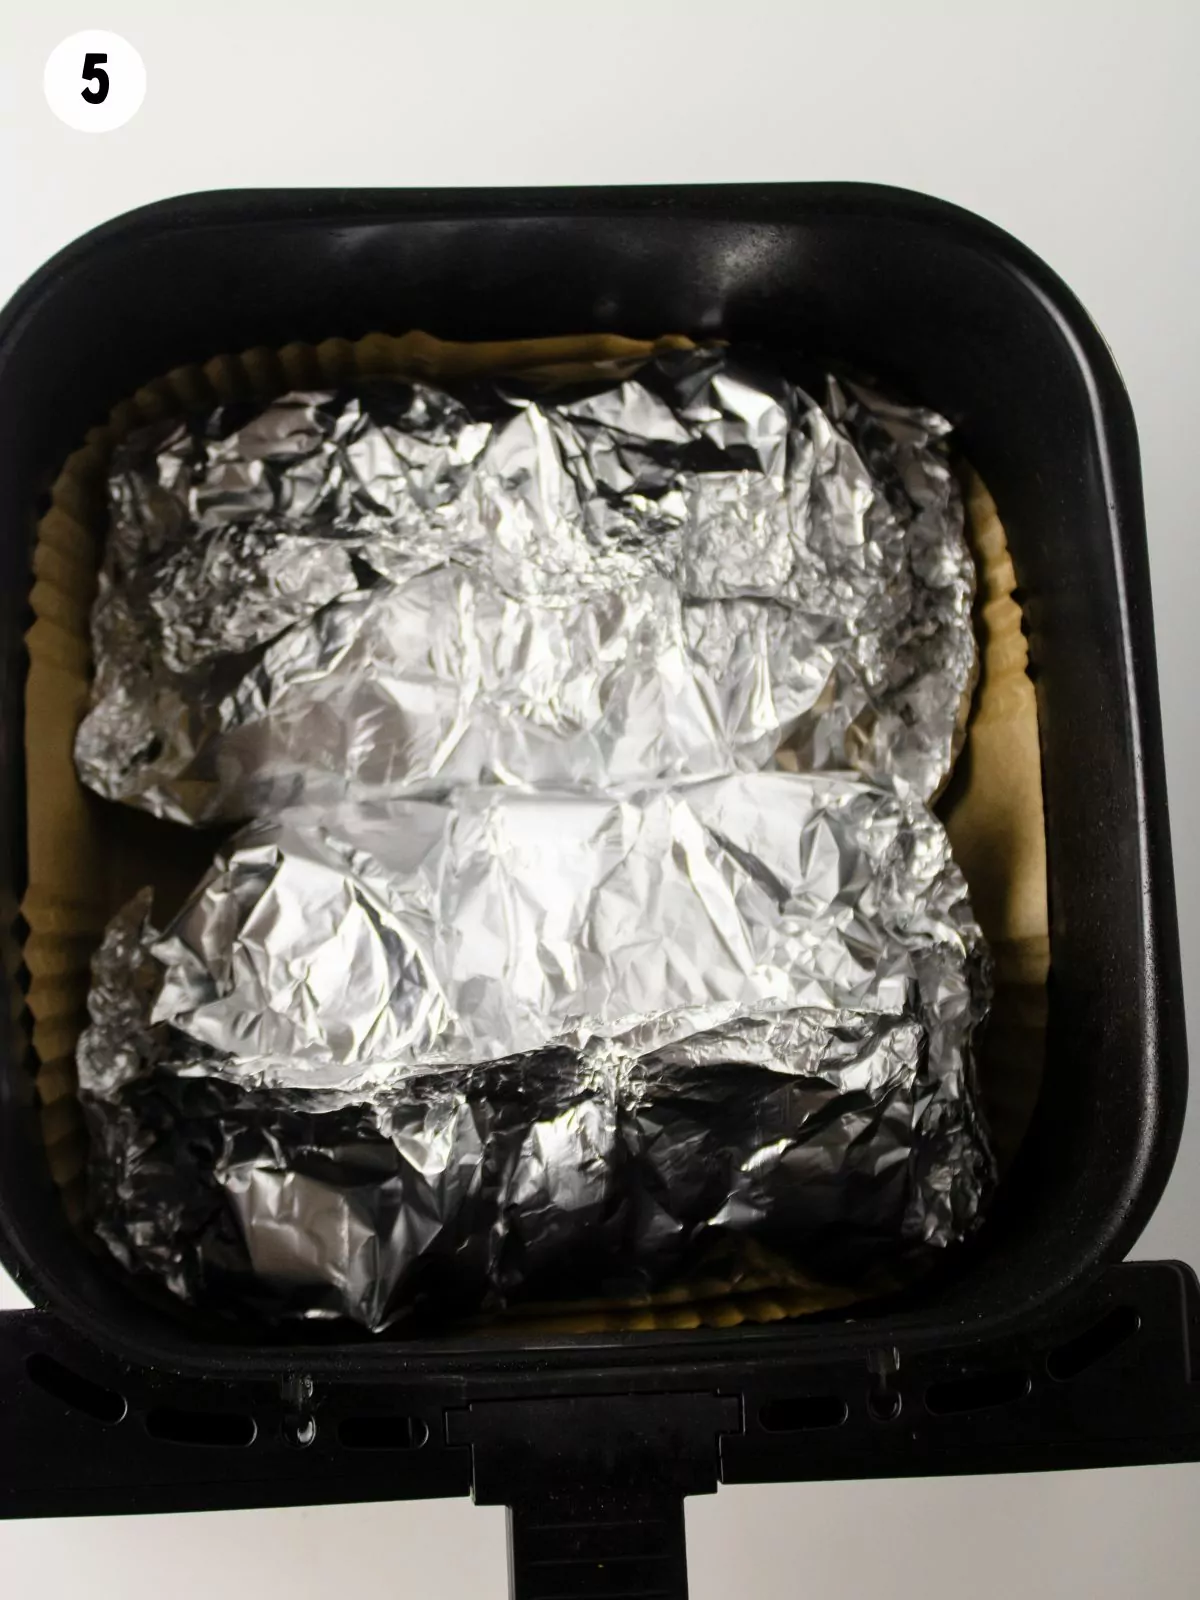 aluminum foil bundles cooked in air fryer.